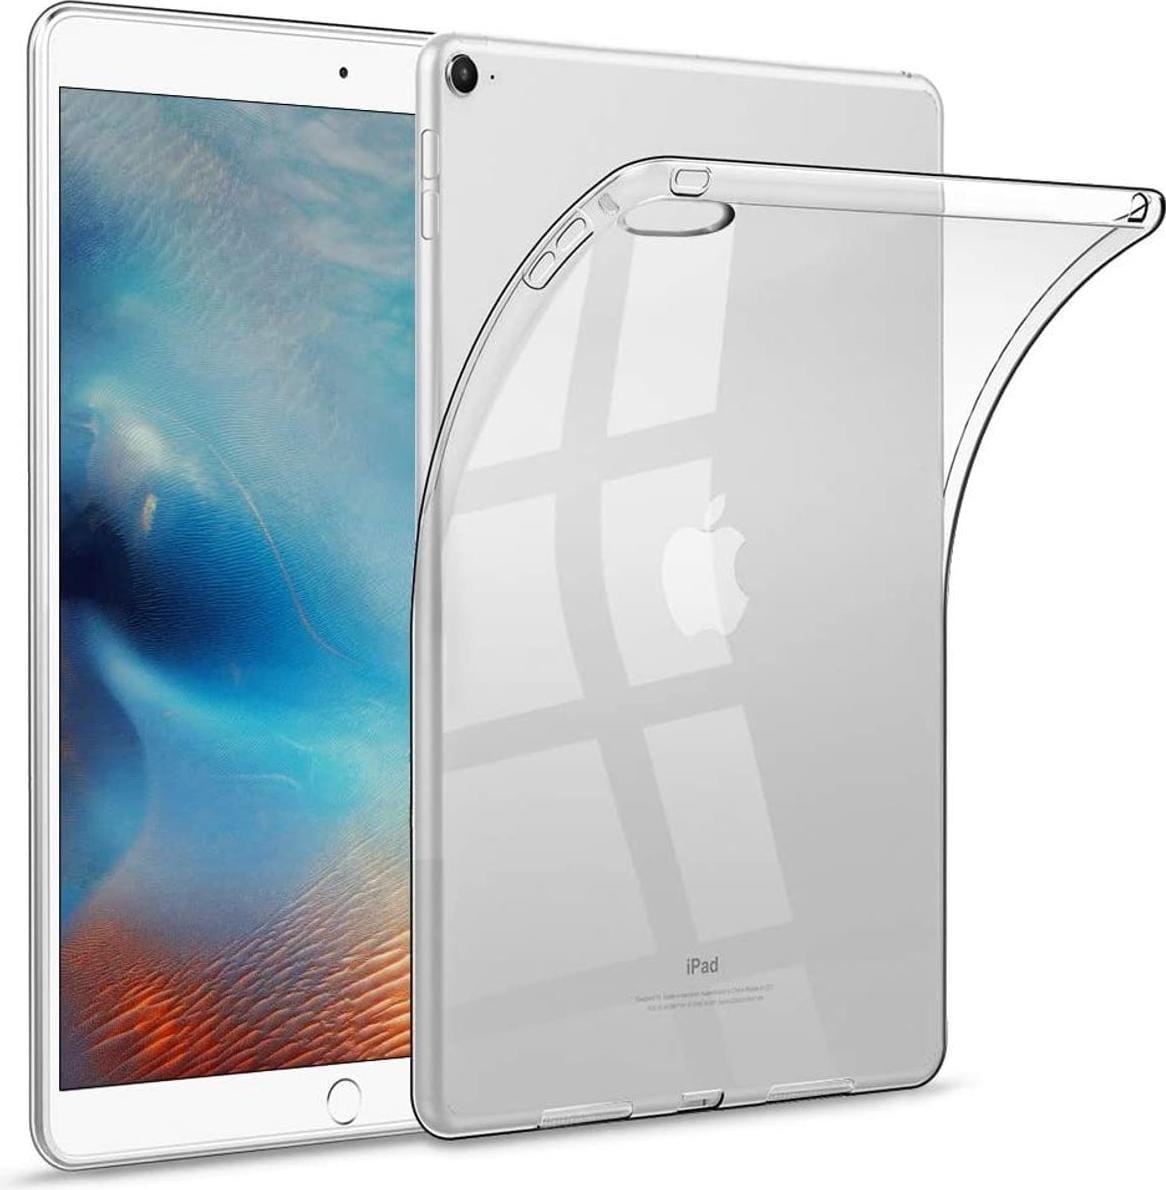 König Design Apple iPad mini 4 durchsichtige Tablethülle Schutzcase Cover Etui Transparent (IPad Mini 4), Tablet Hülle, Transparent